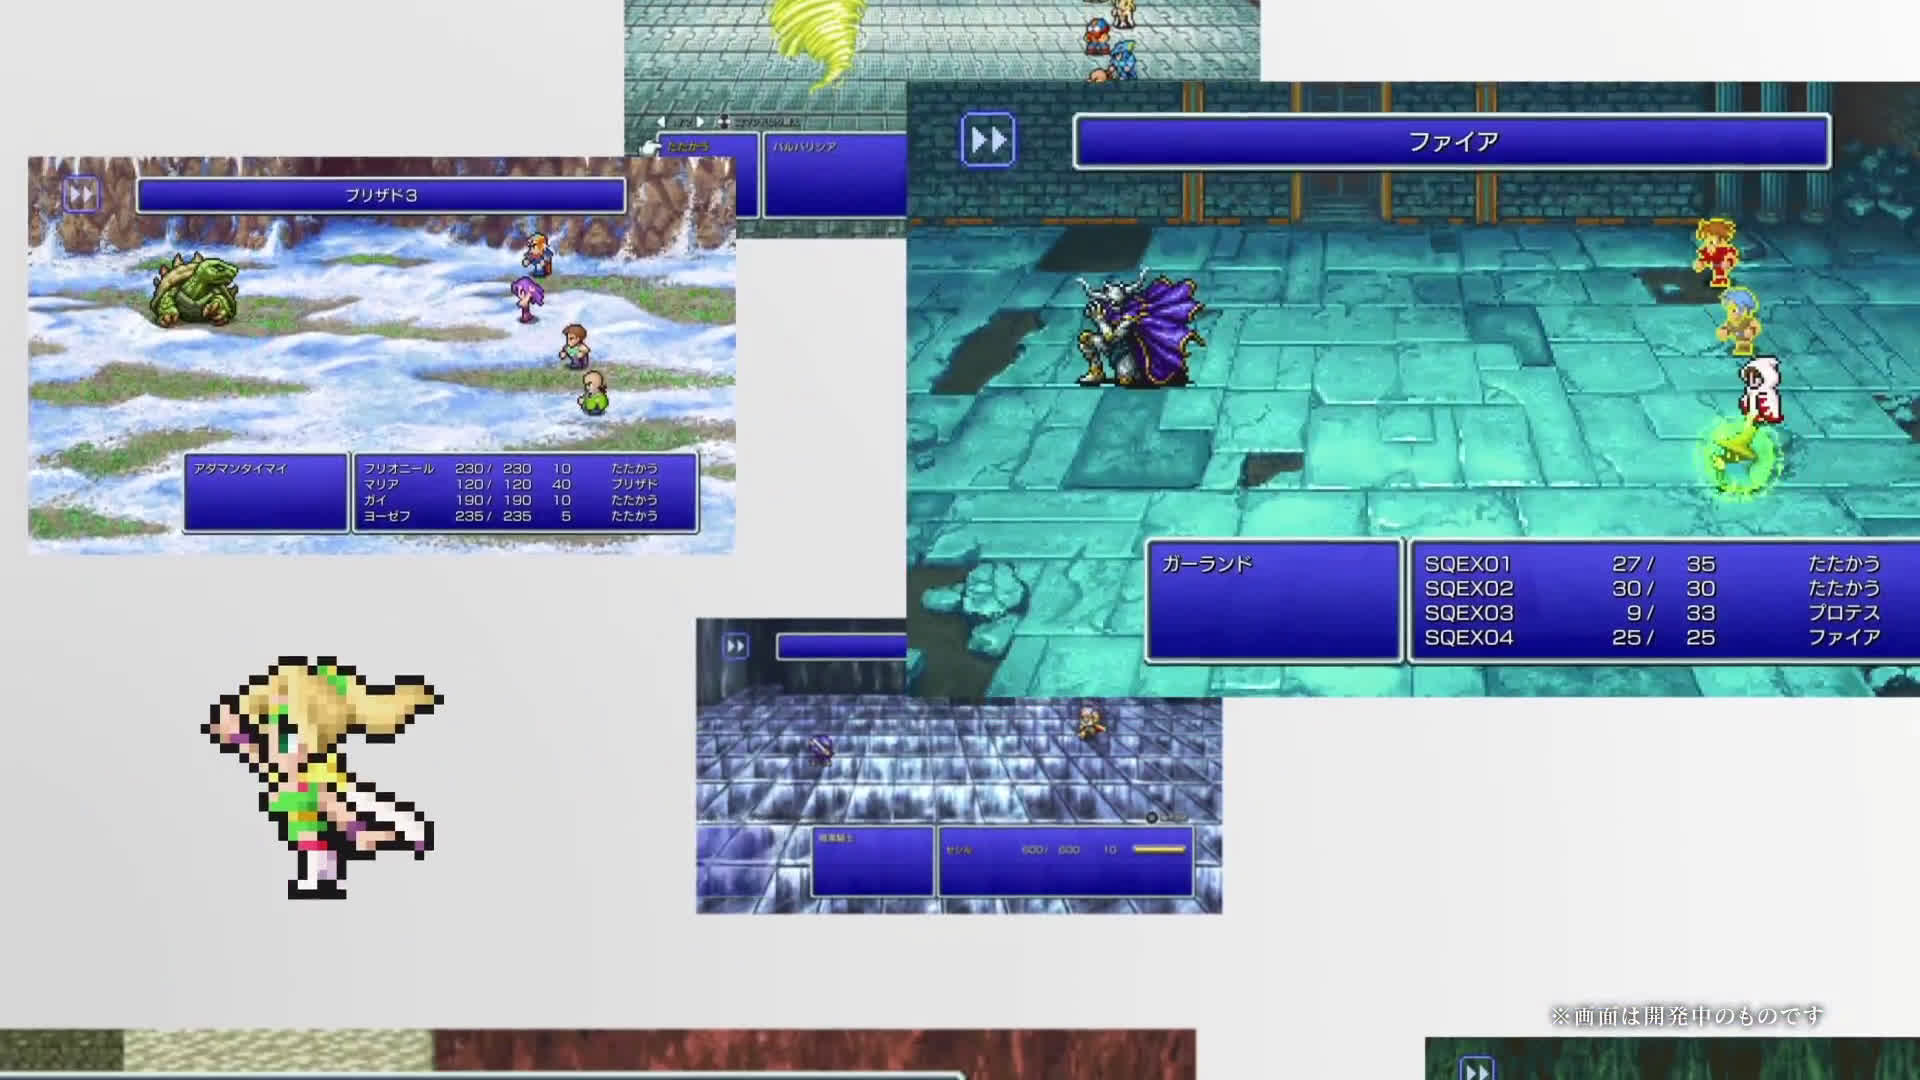  Final Fantasy I-VI Pixel Remaster Collection (Multi